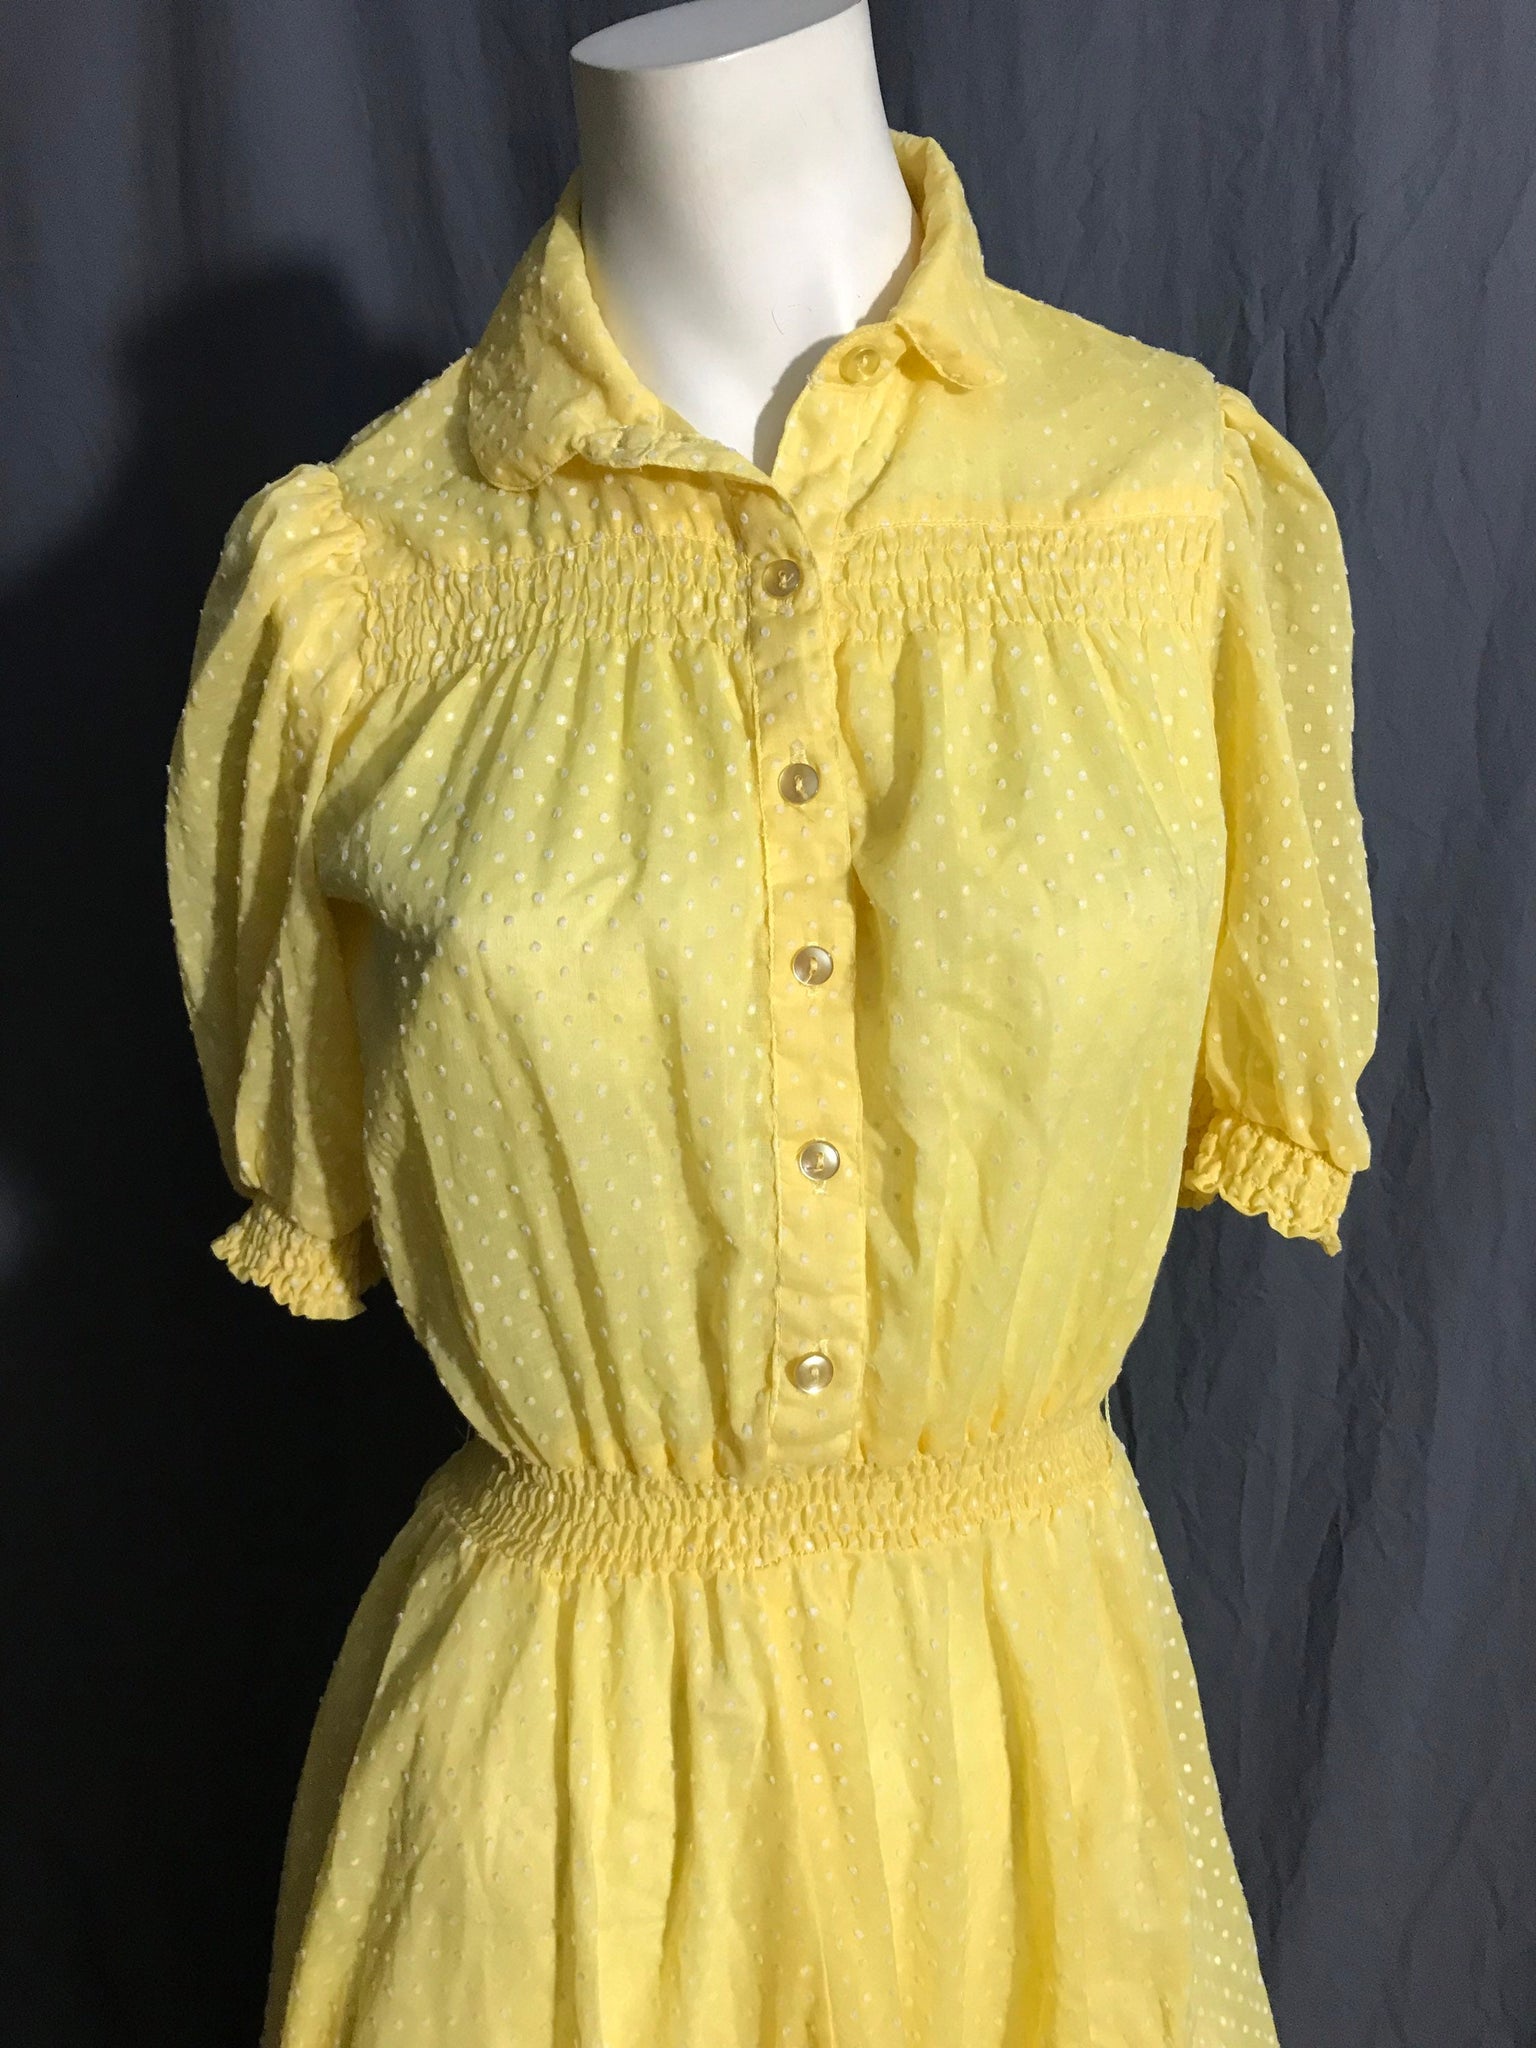 Vintage 1970’s yellow polka dot sheer collared dress M